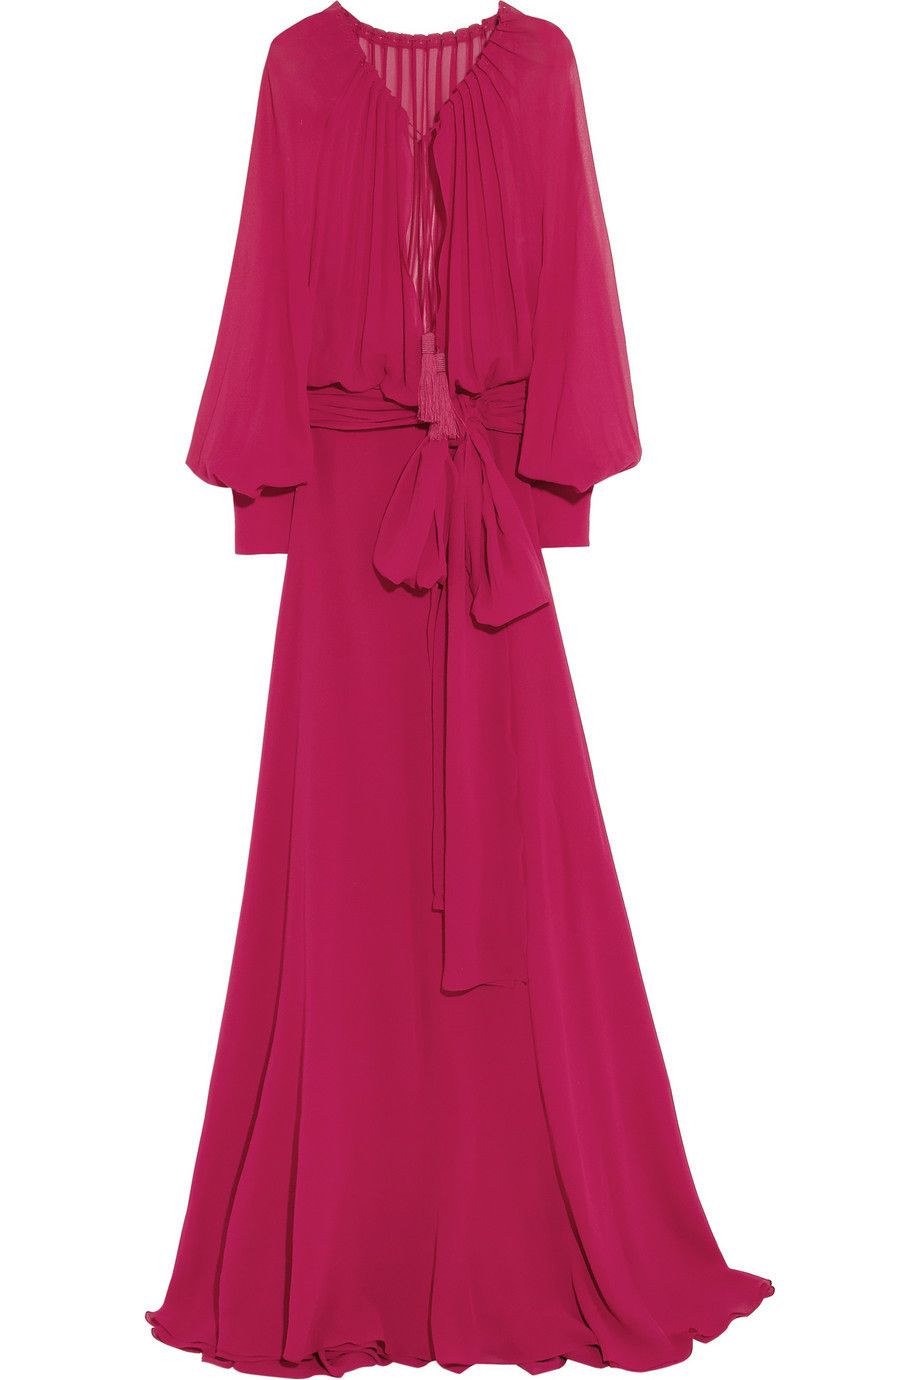 Sleeve, Textile, Red, Magenta, Dress, Pink, One-piece garment, Formal wear, Pattern, Maroon, 